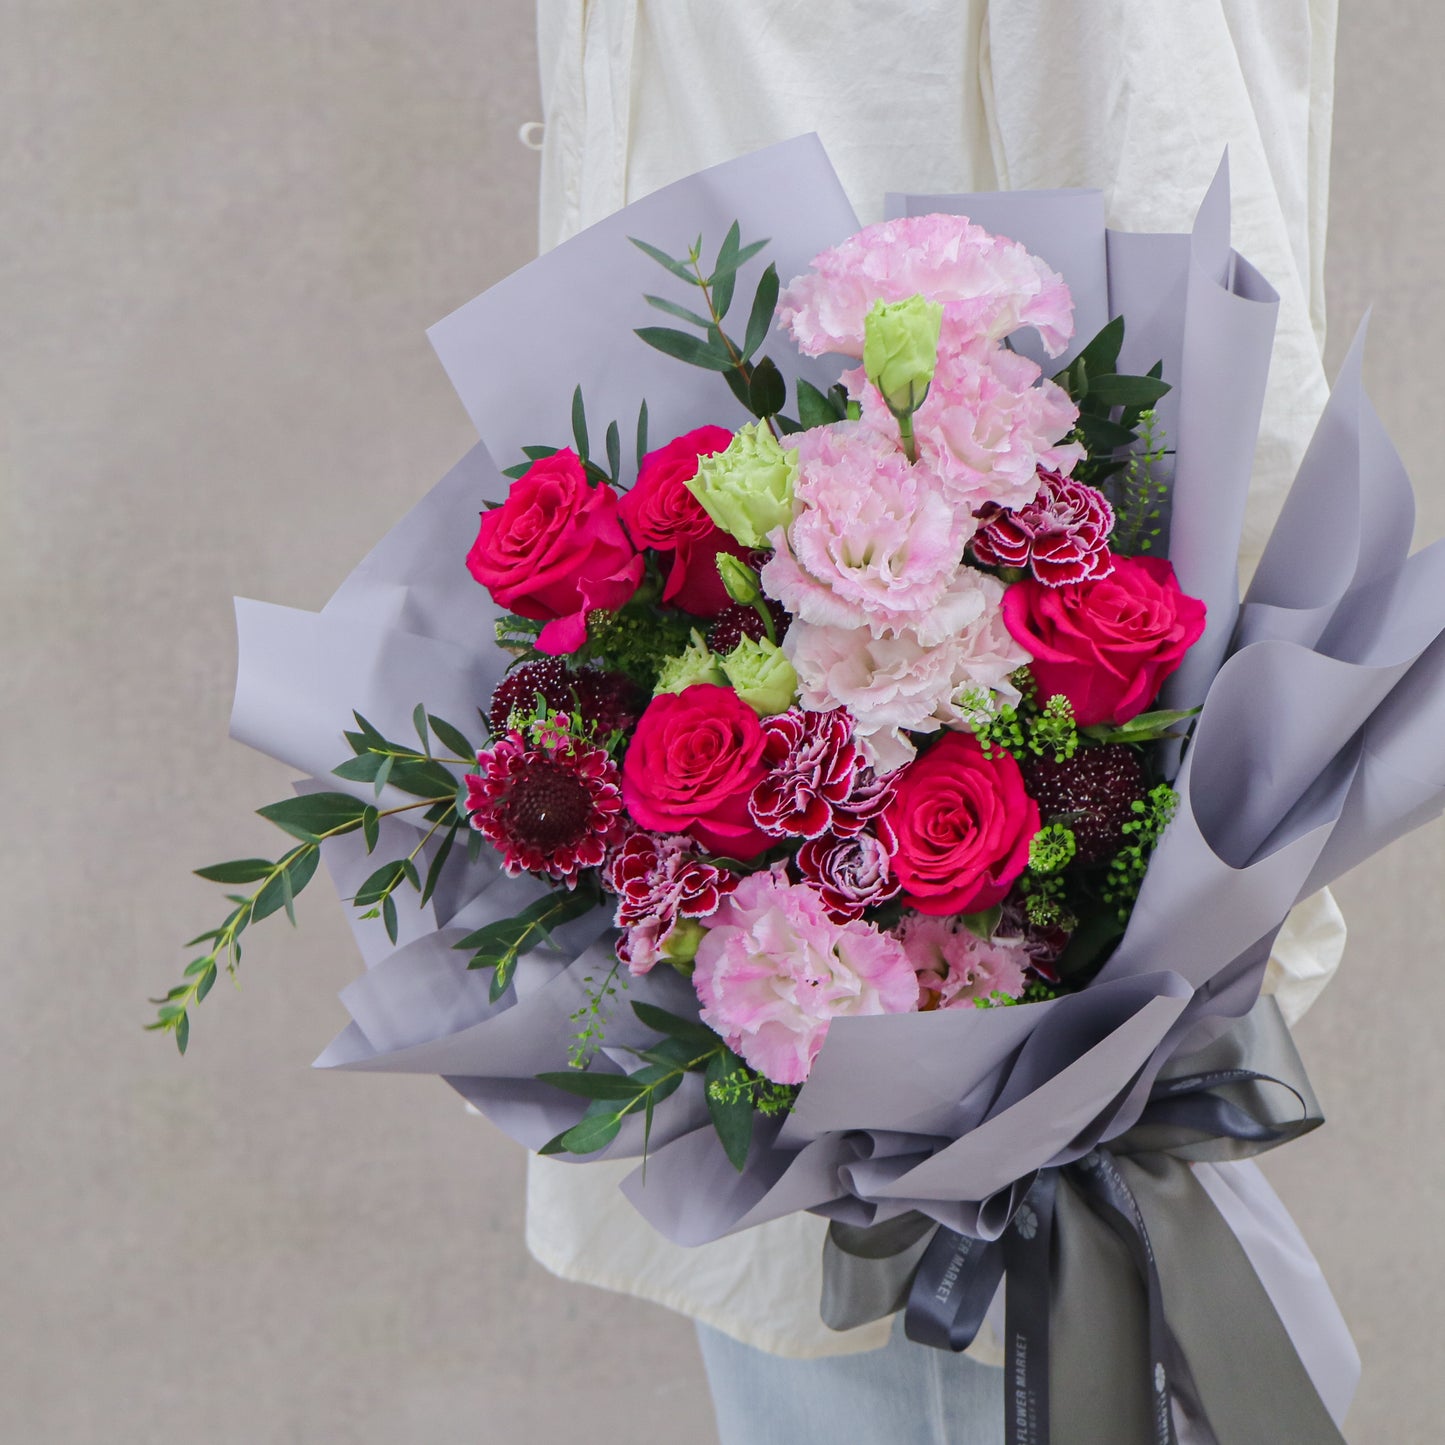 桃紅玫瑰粉桔梗花束 Magenta rose and pink eustoma bouquet